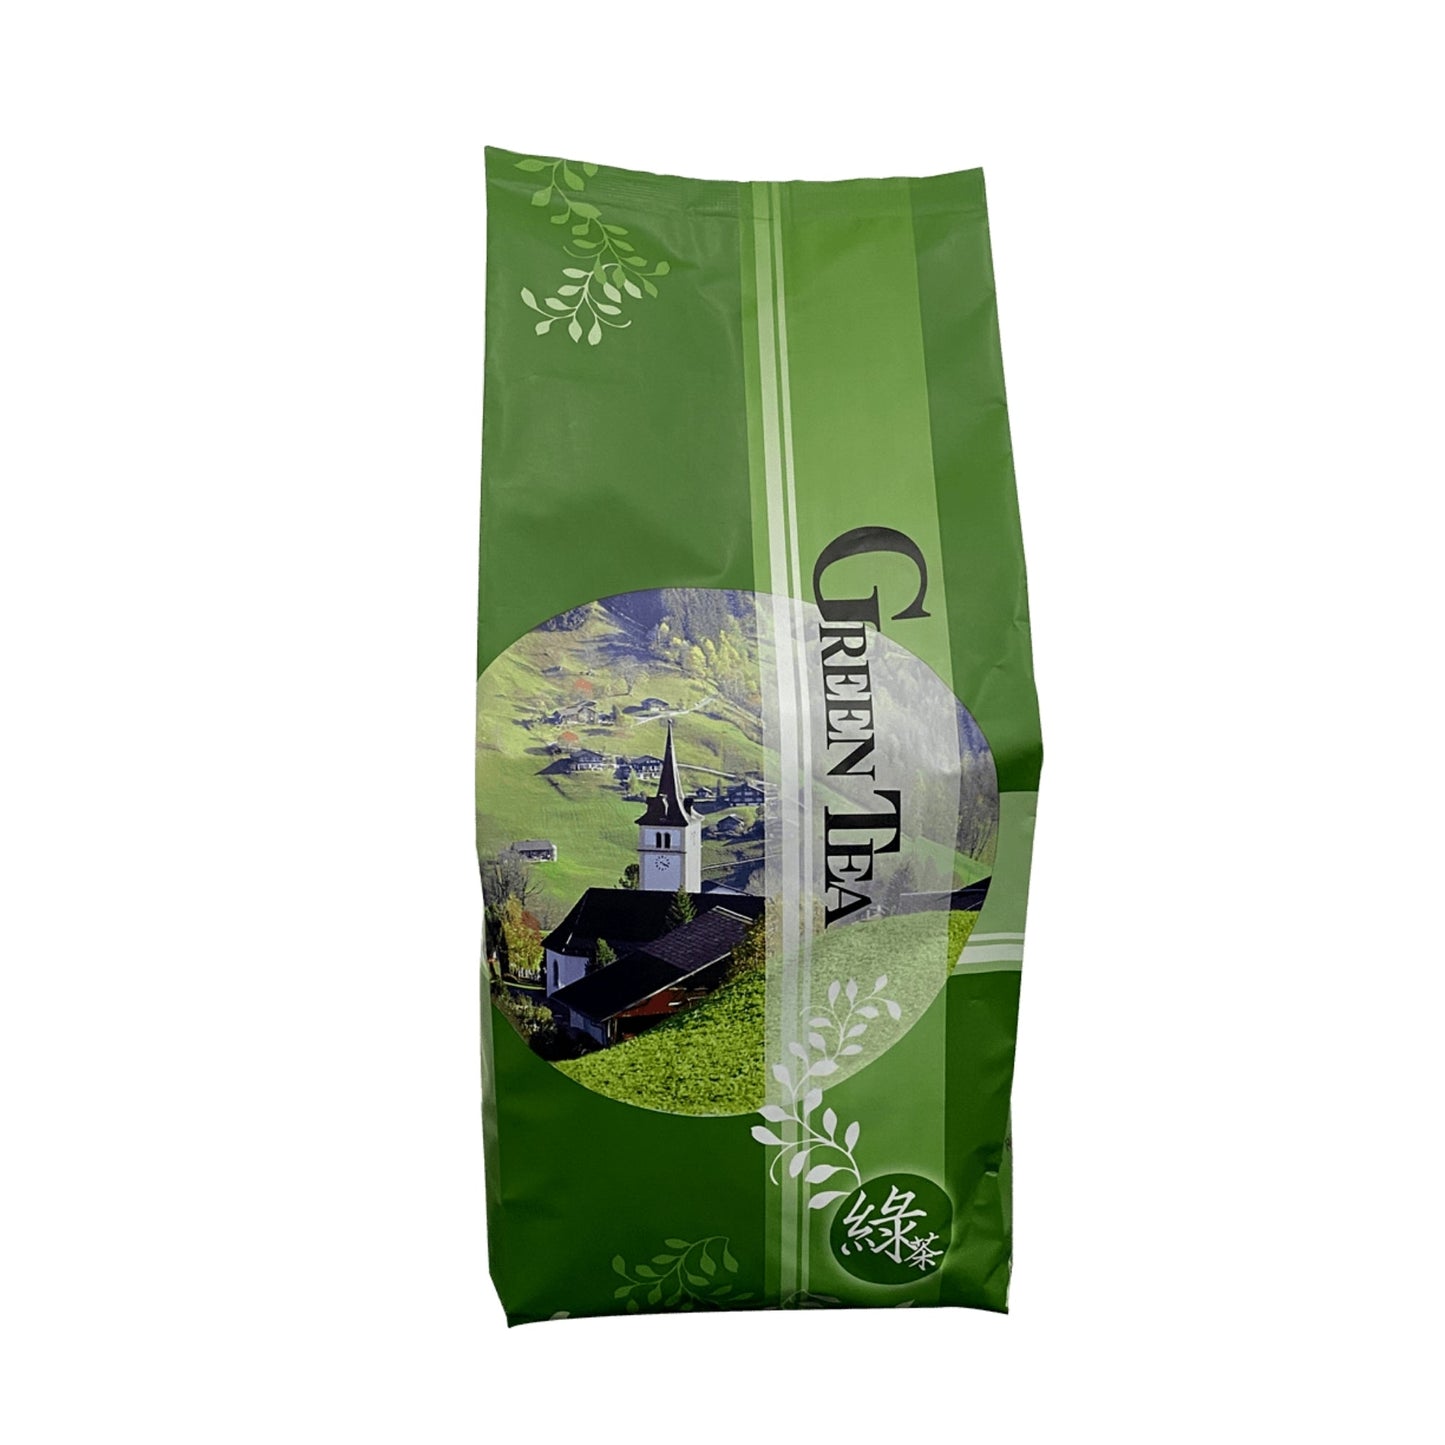 TOP Creamery A+ Jasmine Green Tea 600g - Kreme City Supplies